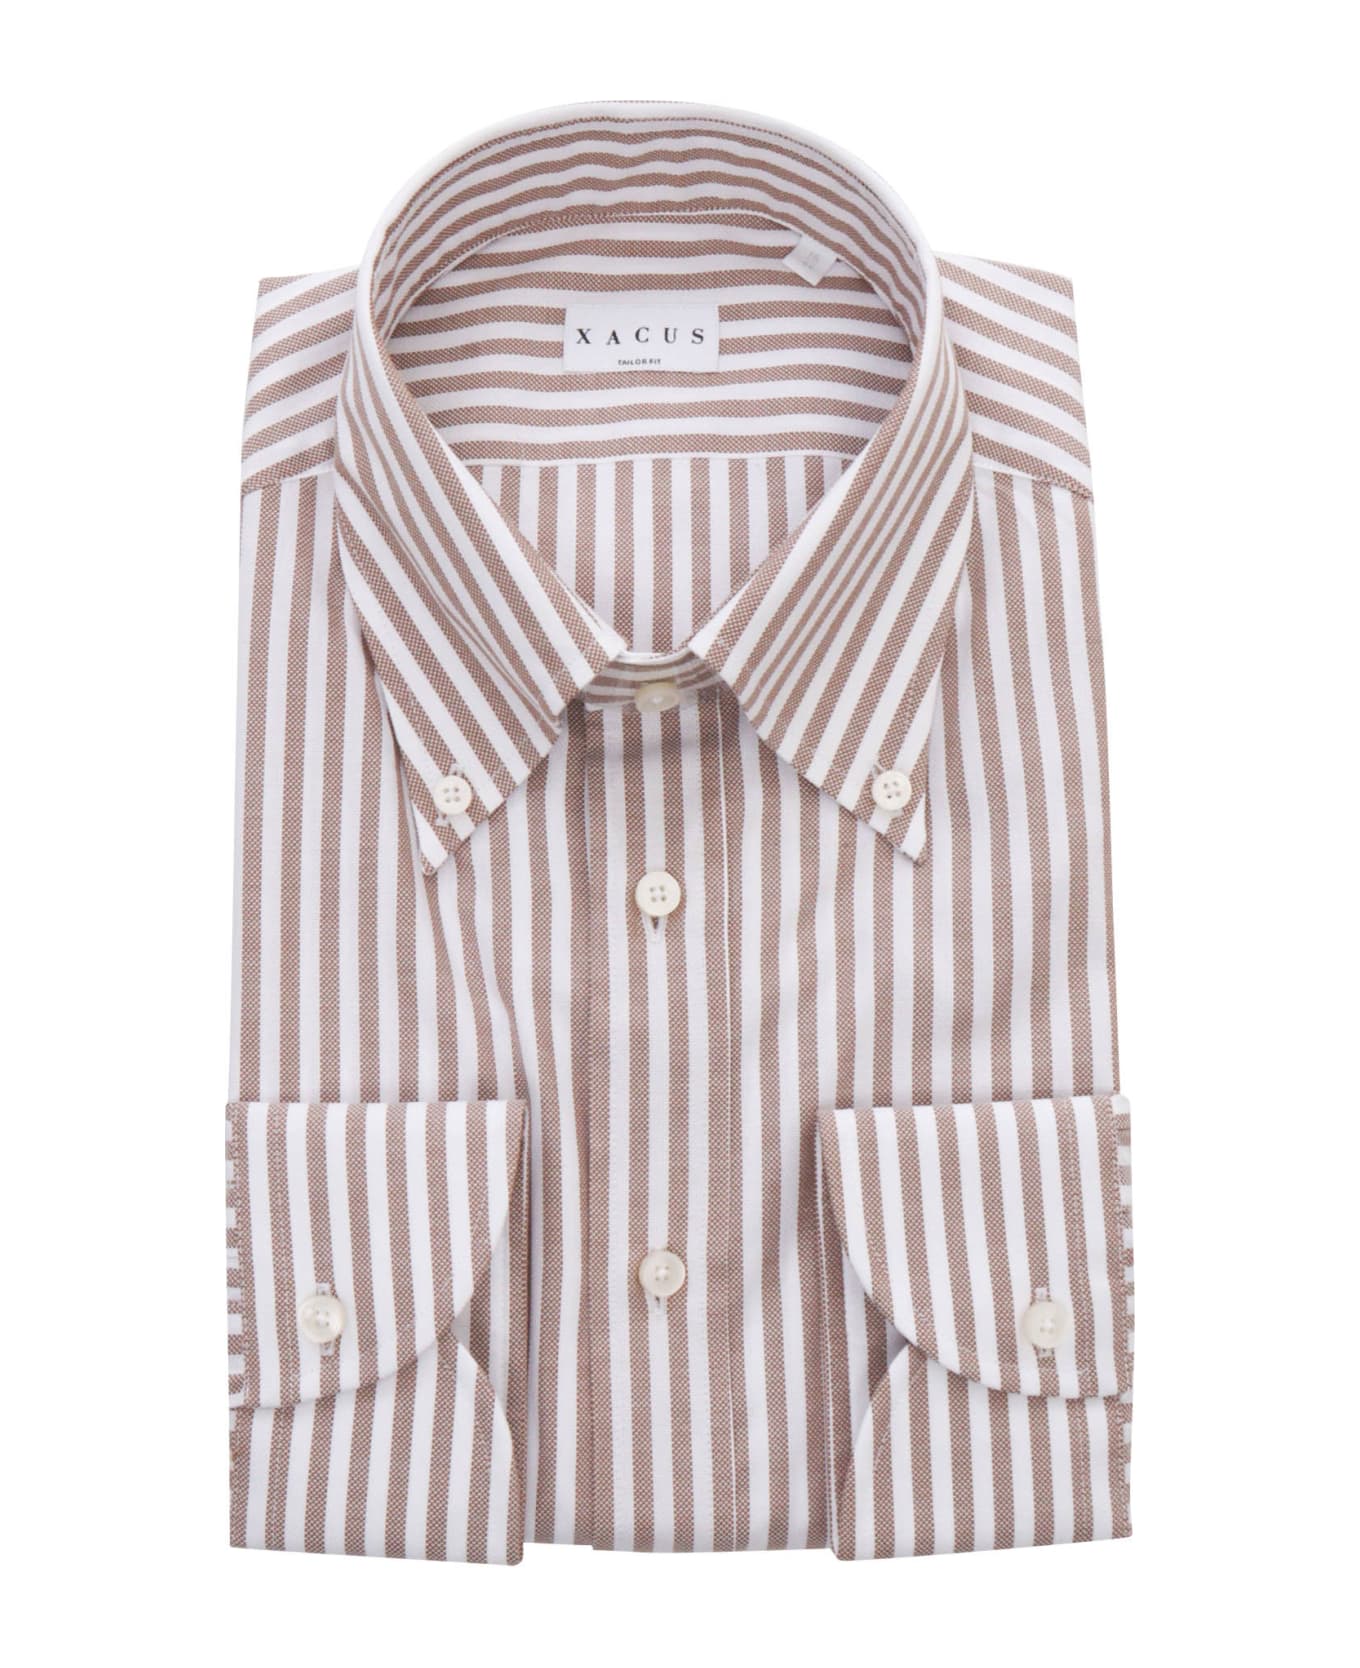 Xacus Brown Striped Cotton Shirt - MULTICOLOR